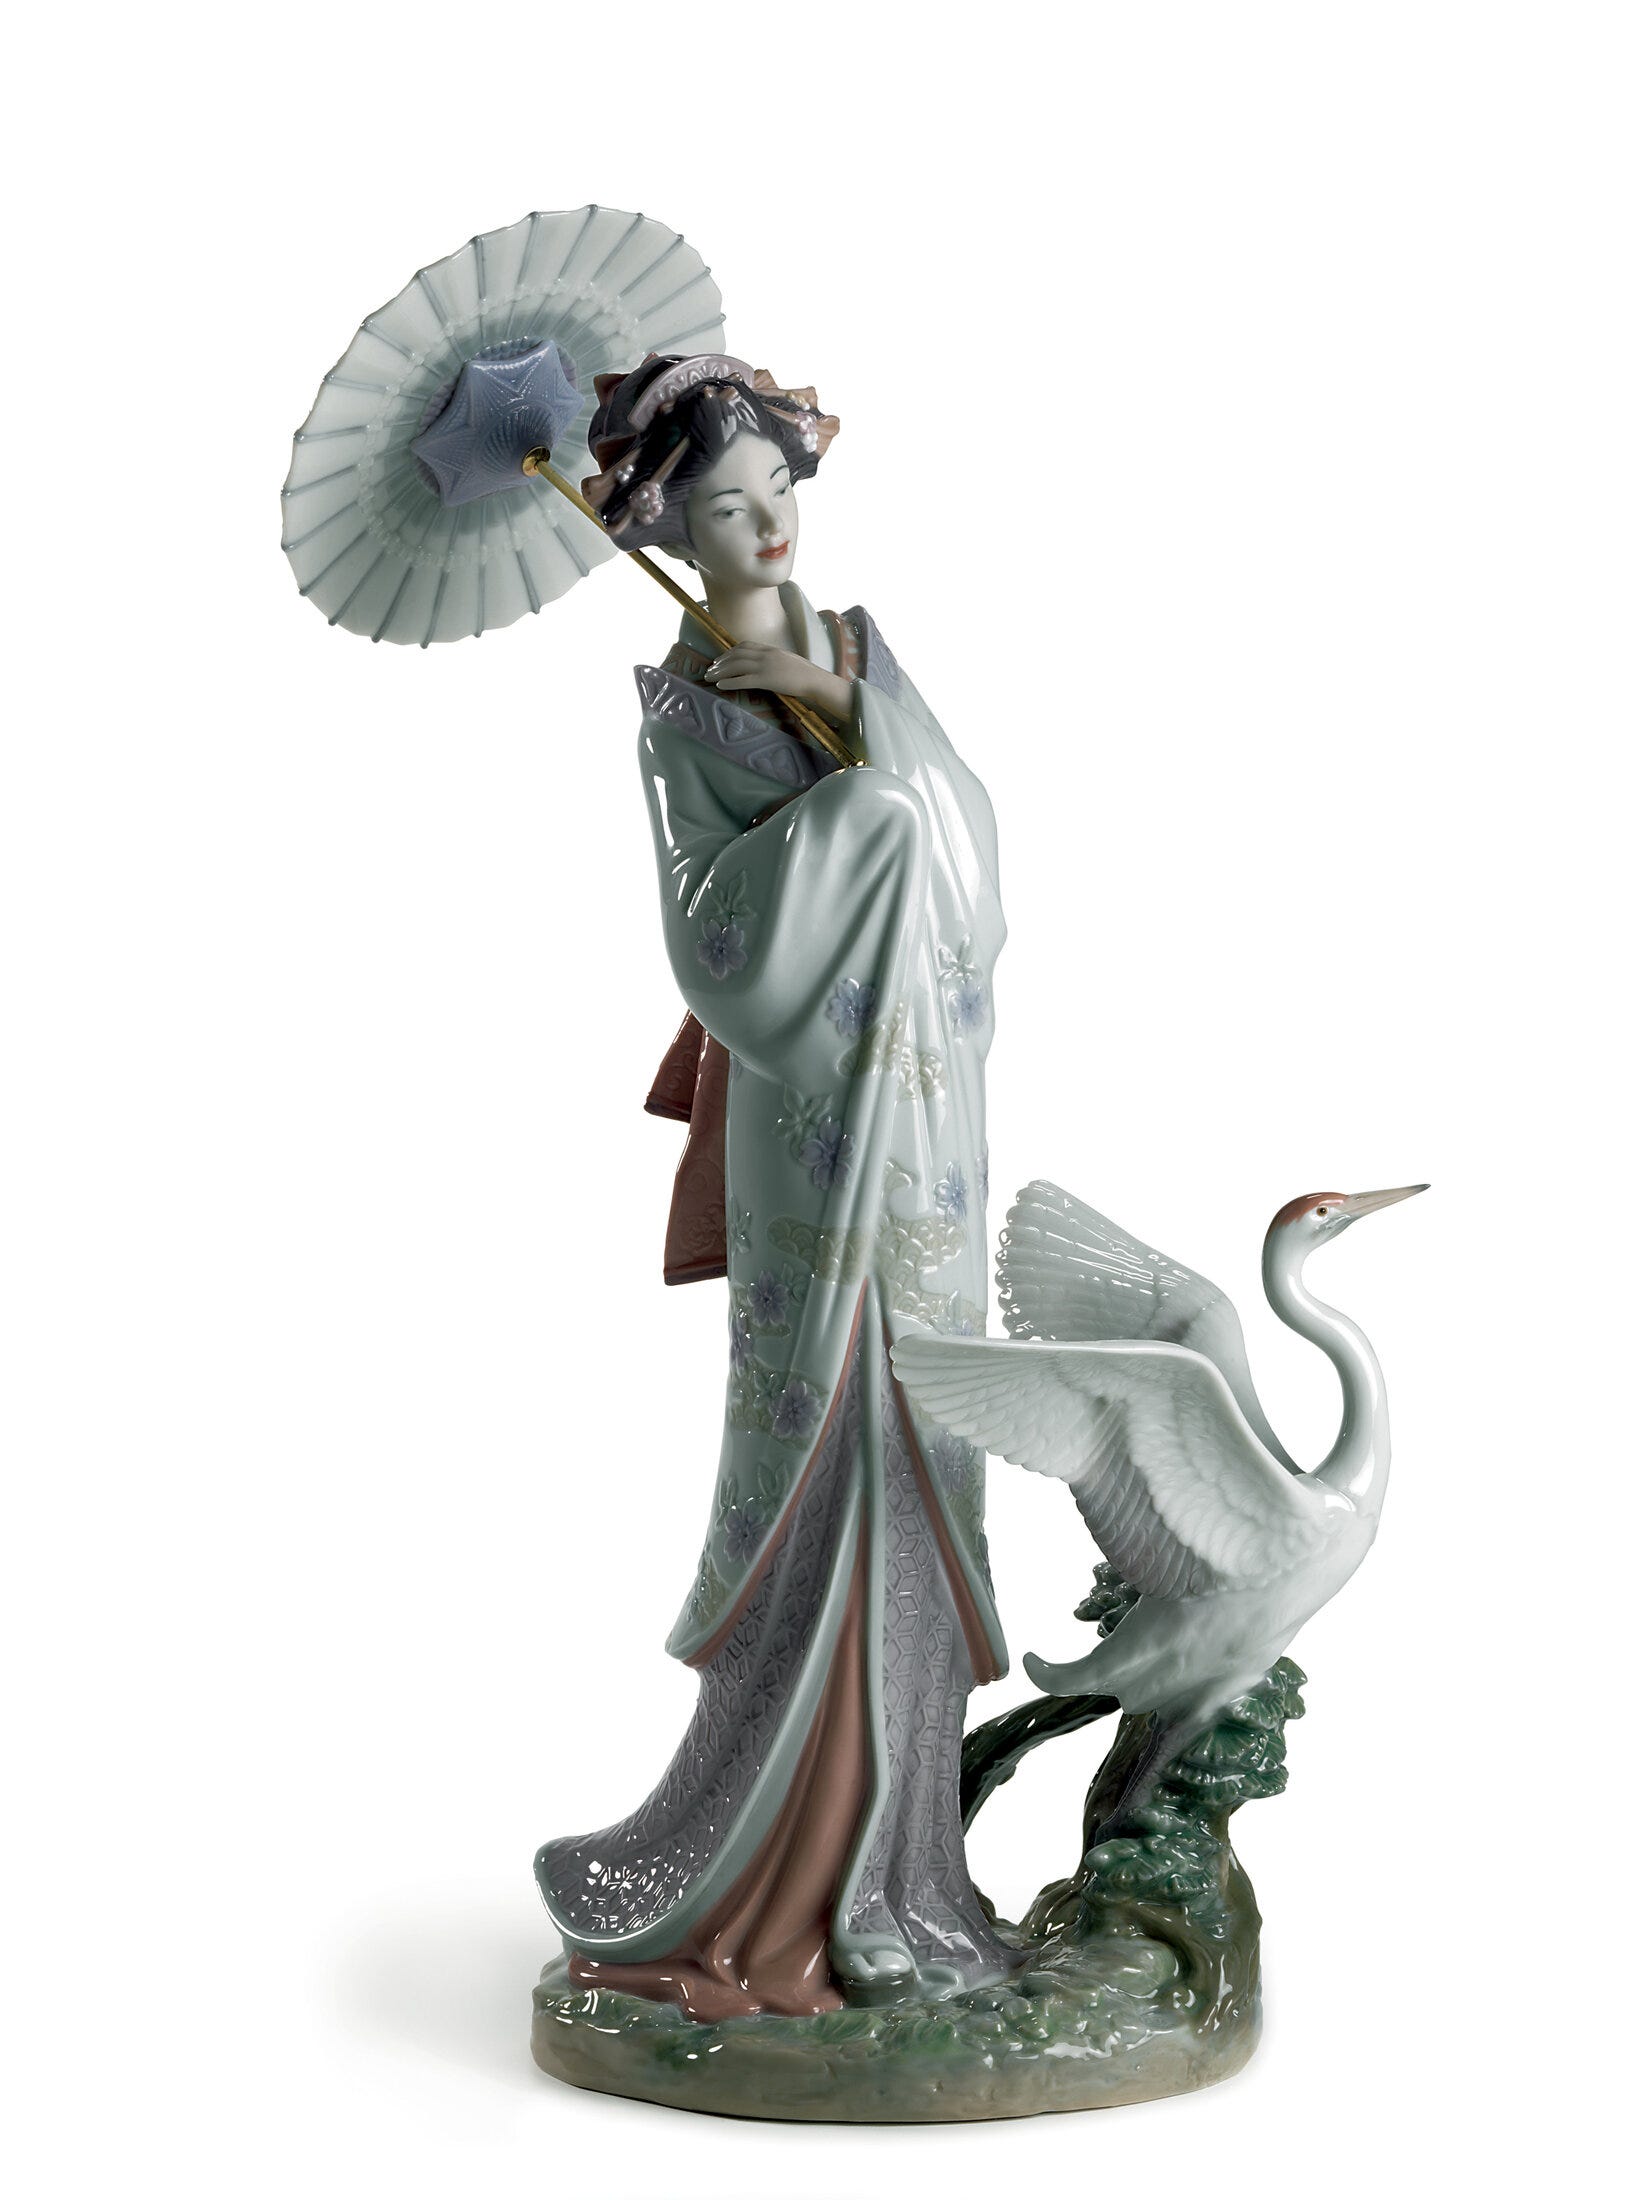 Japanese Portrait Woman Figurine